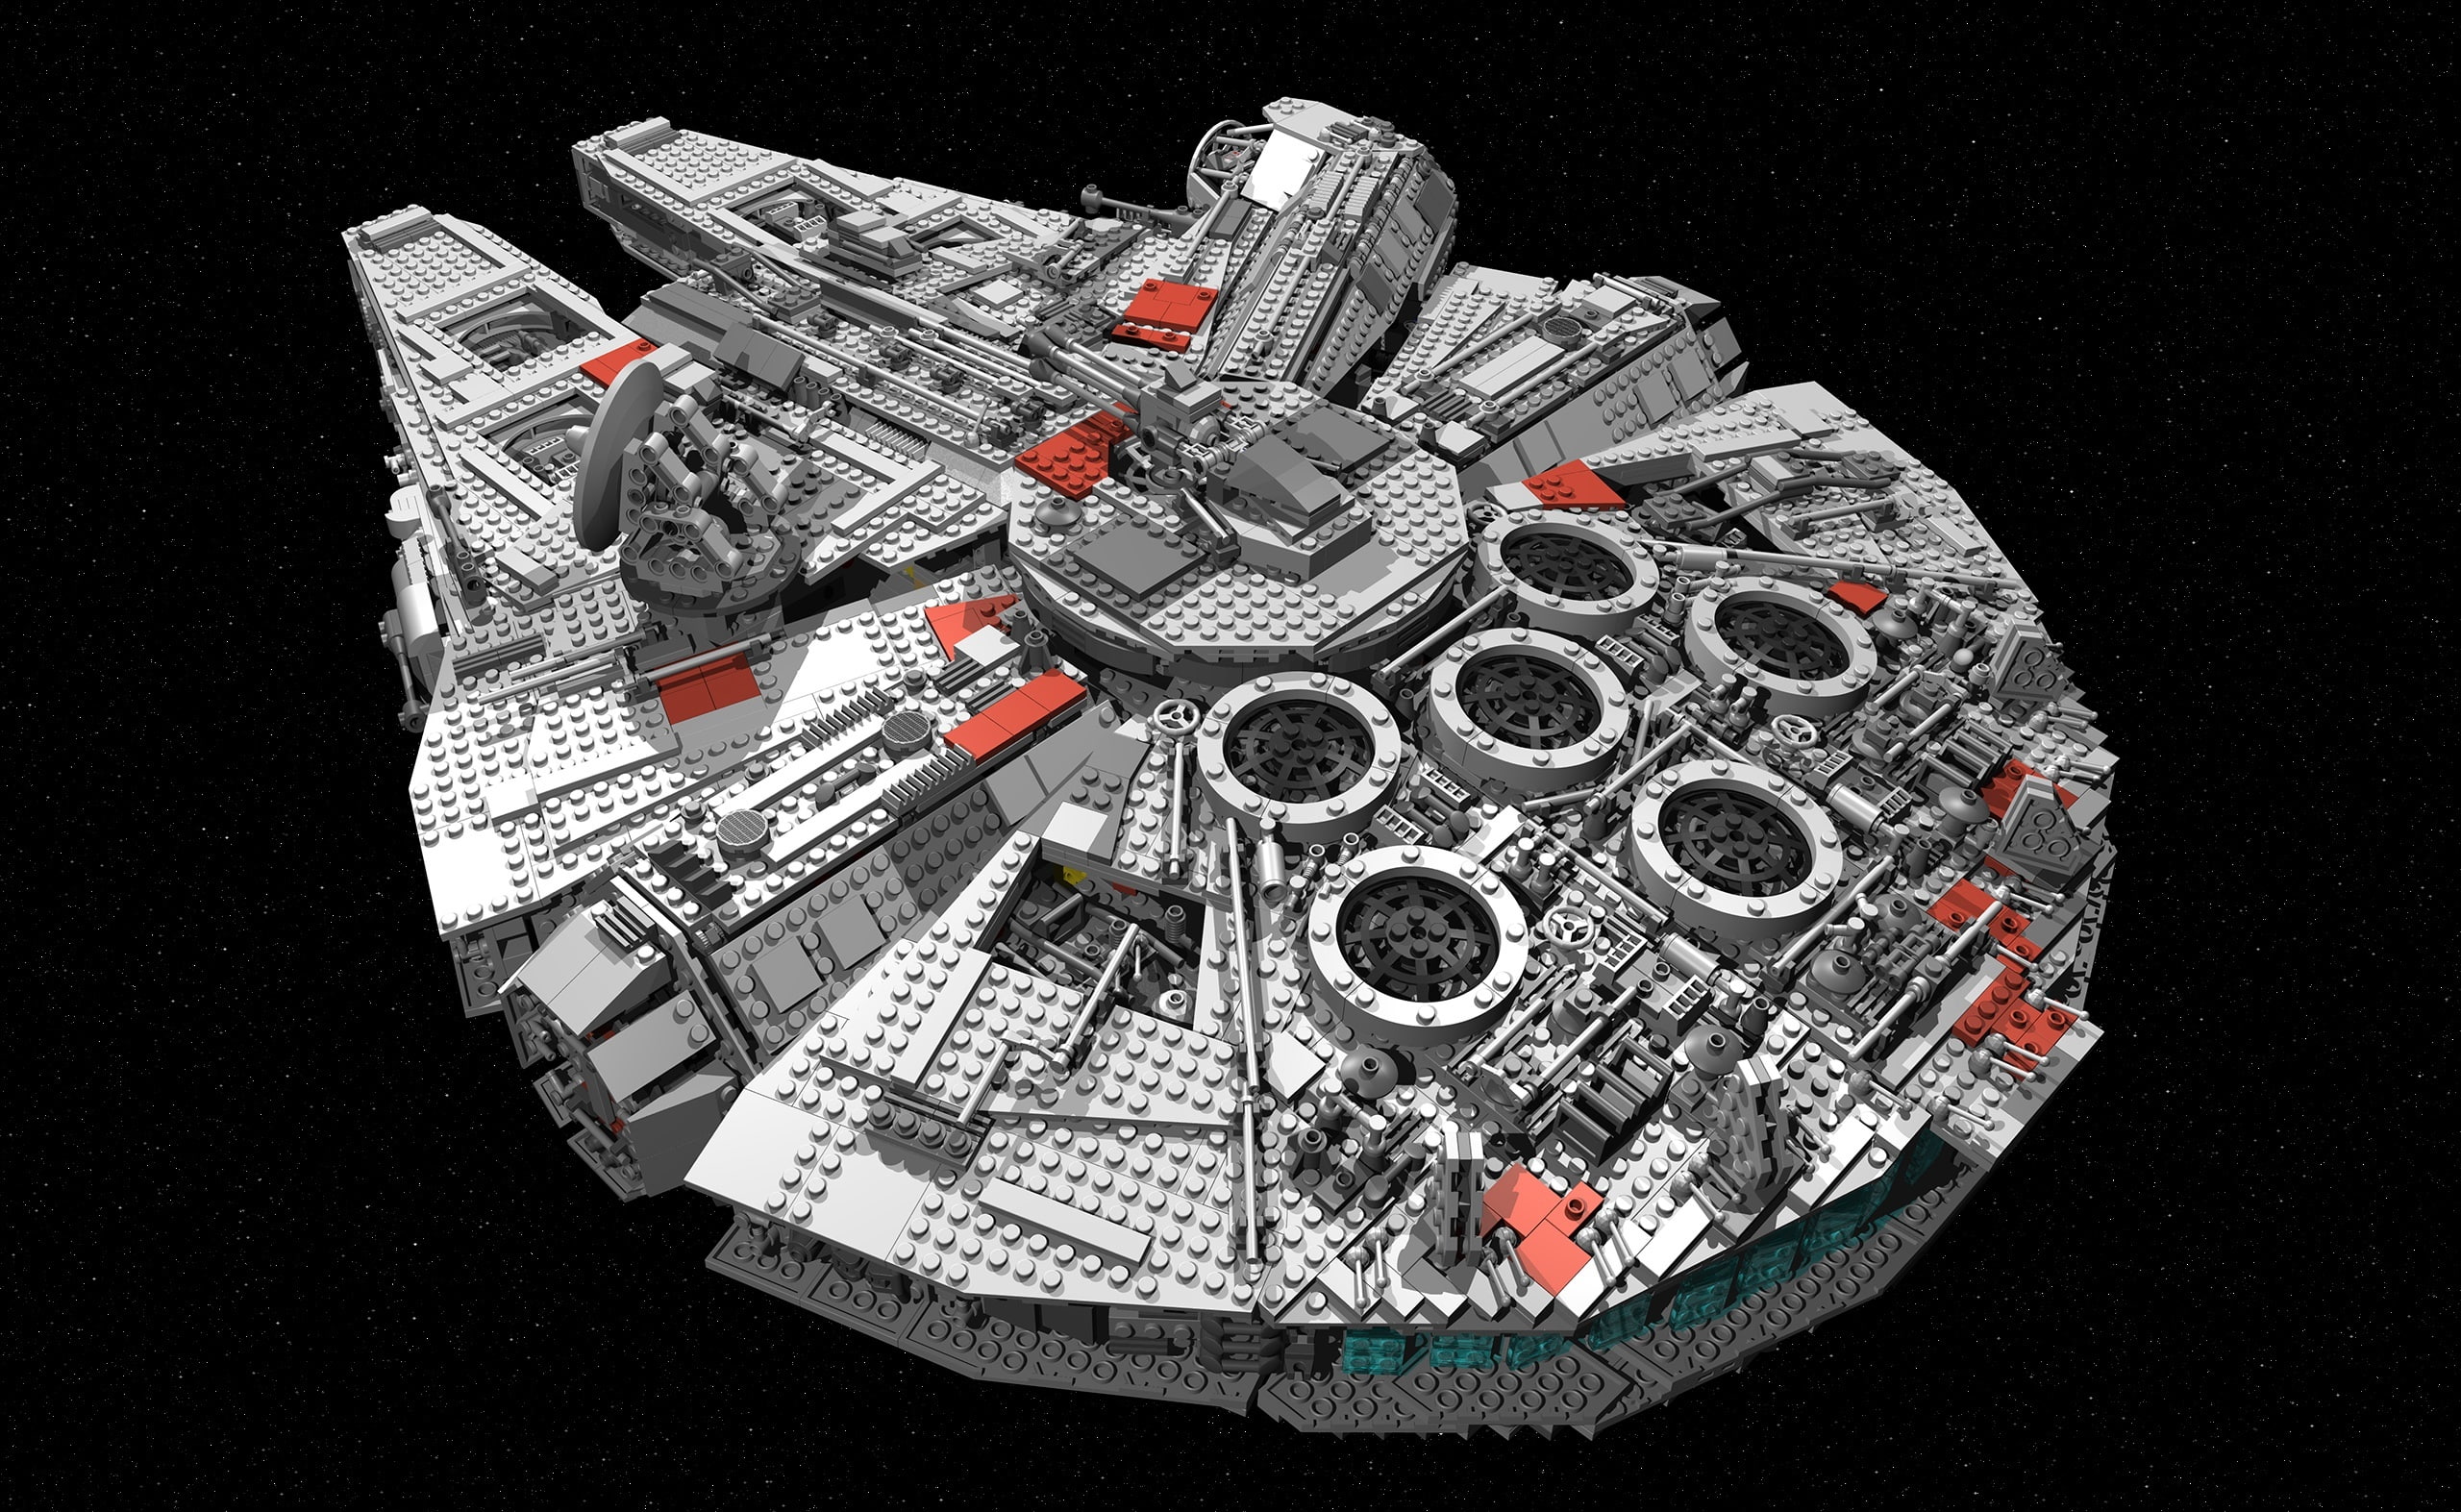 Star Wars Spaceship Millenium Falcon, Millennium Falcon illustration